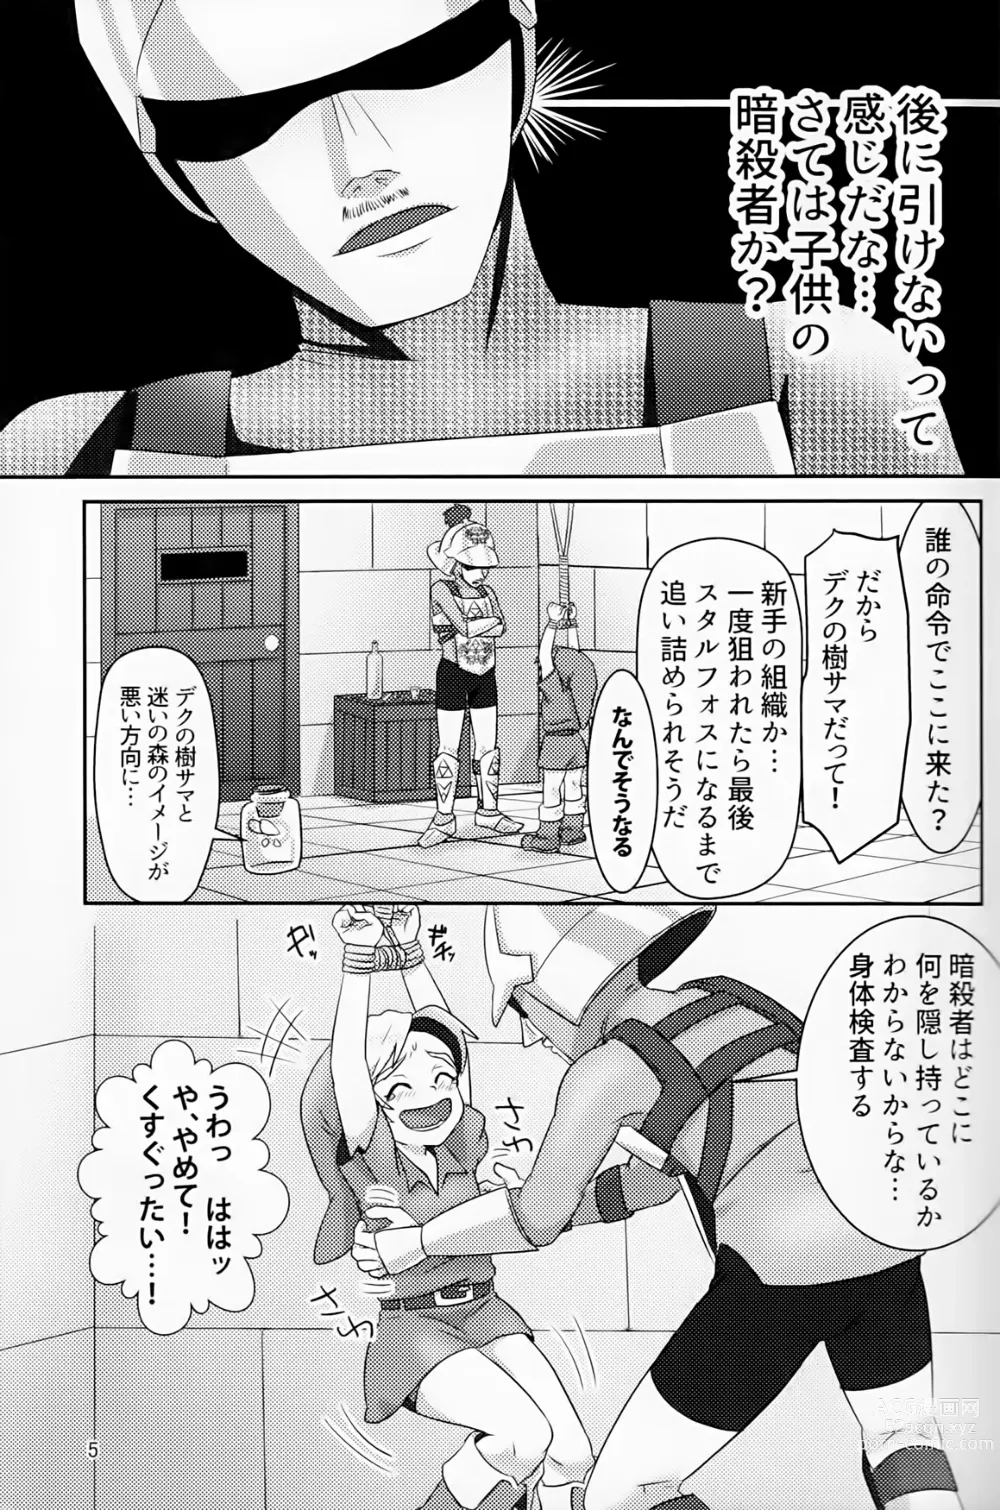 Page 4 of doujinshi Oi soko no kozō tomare!!